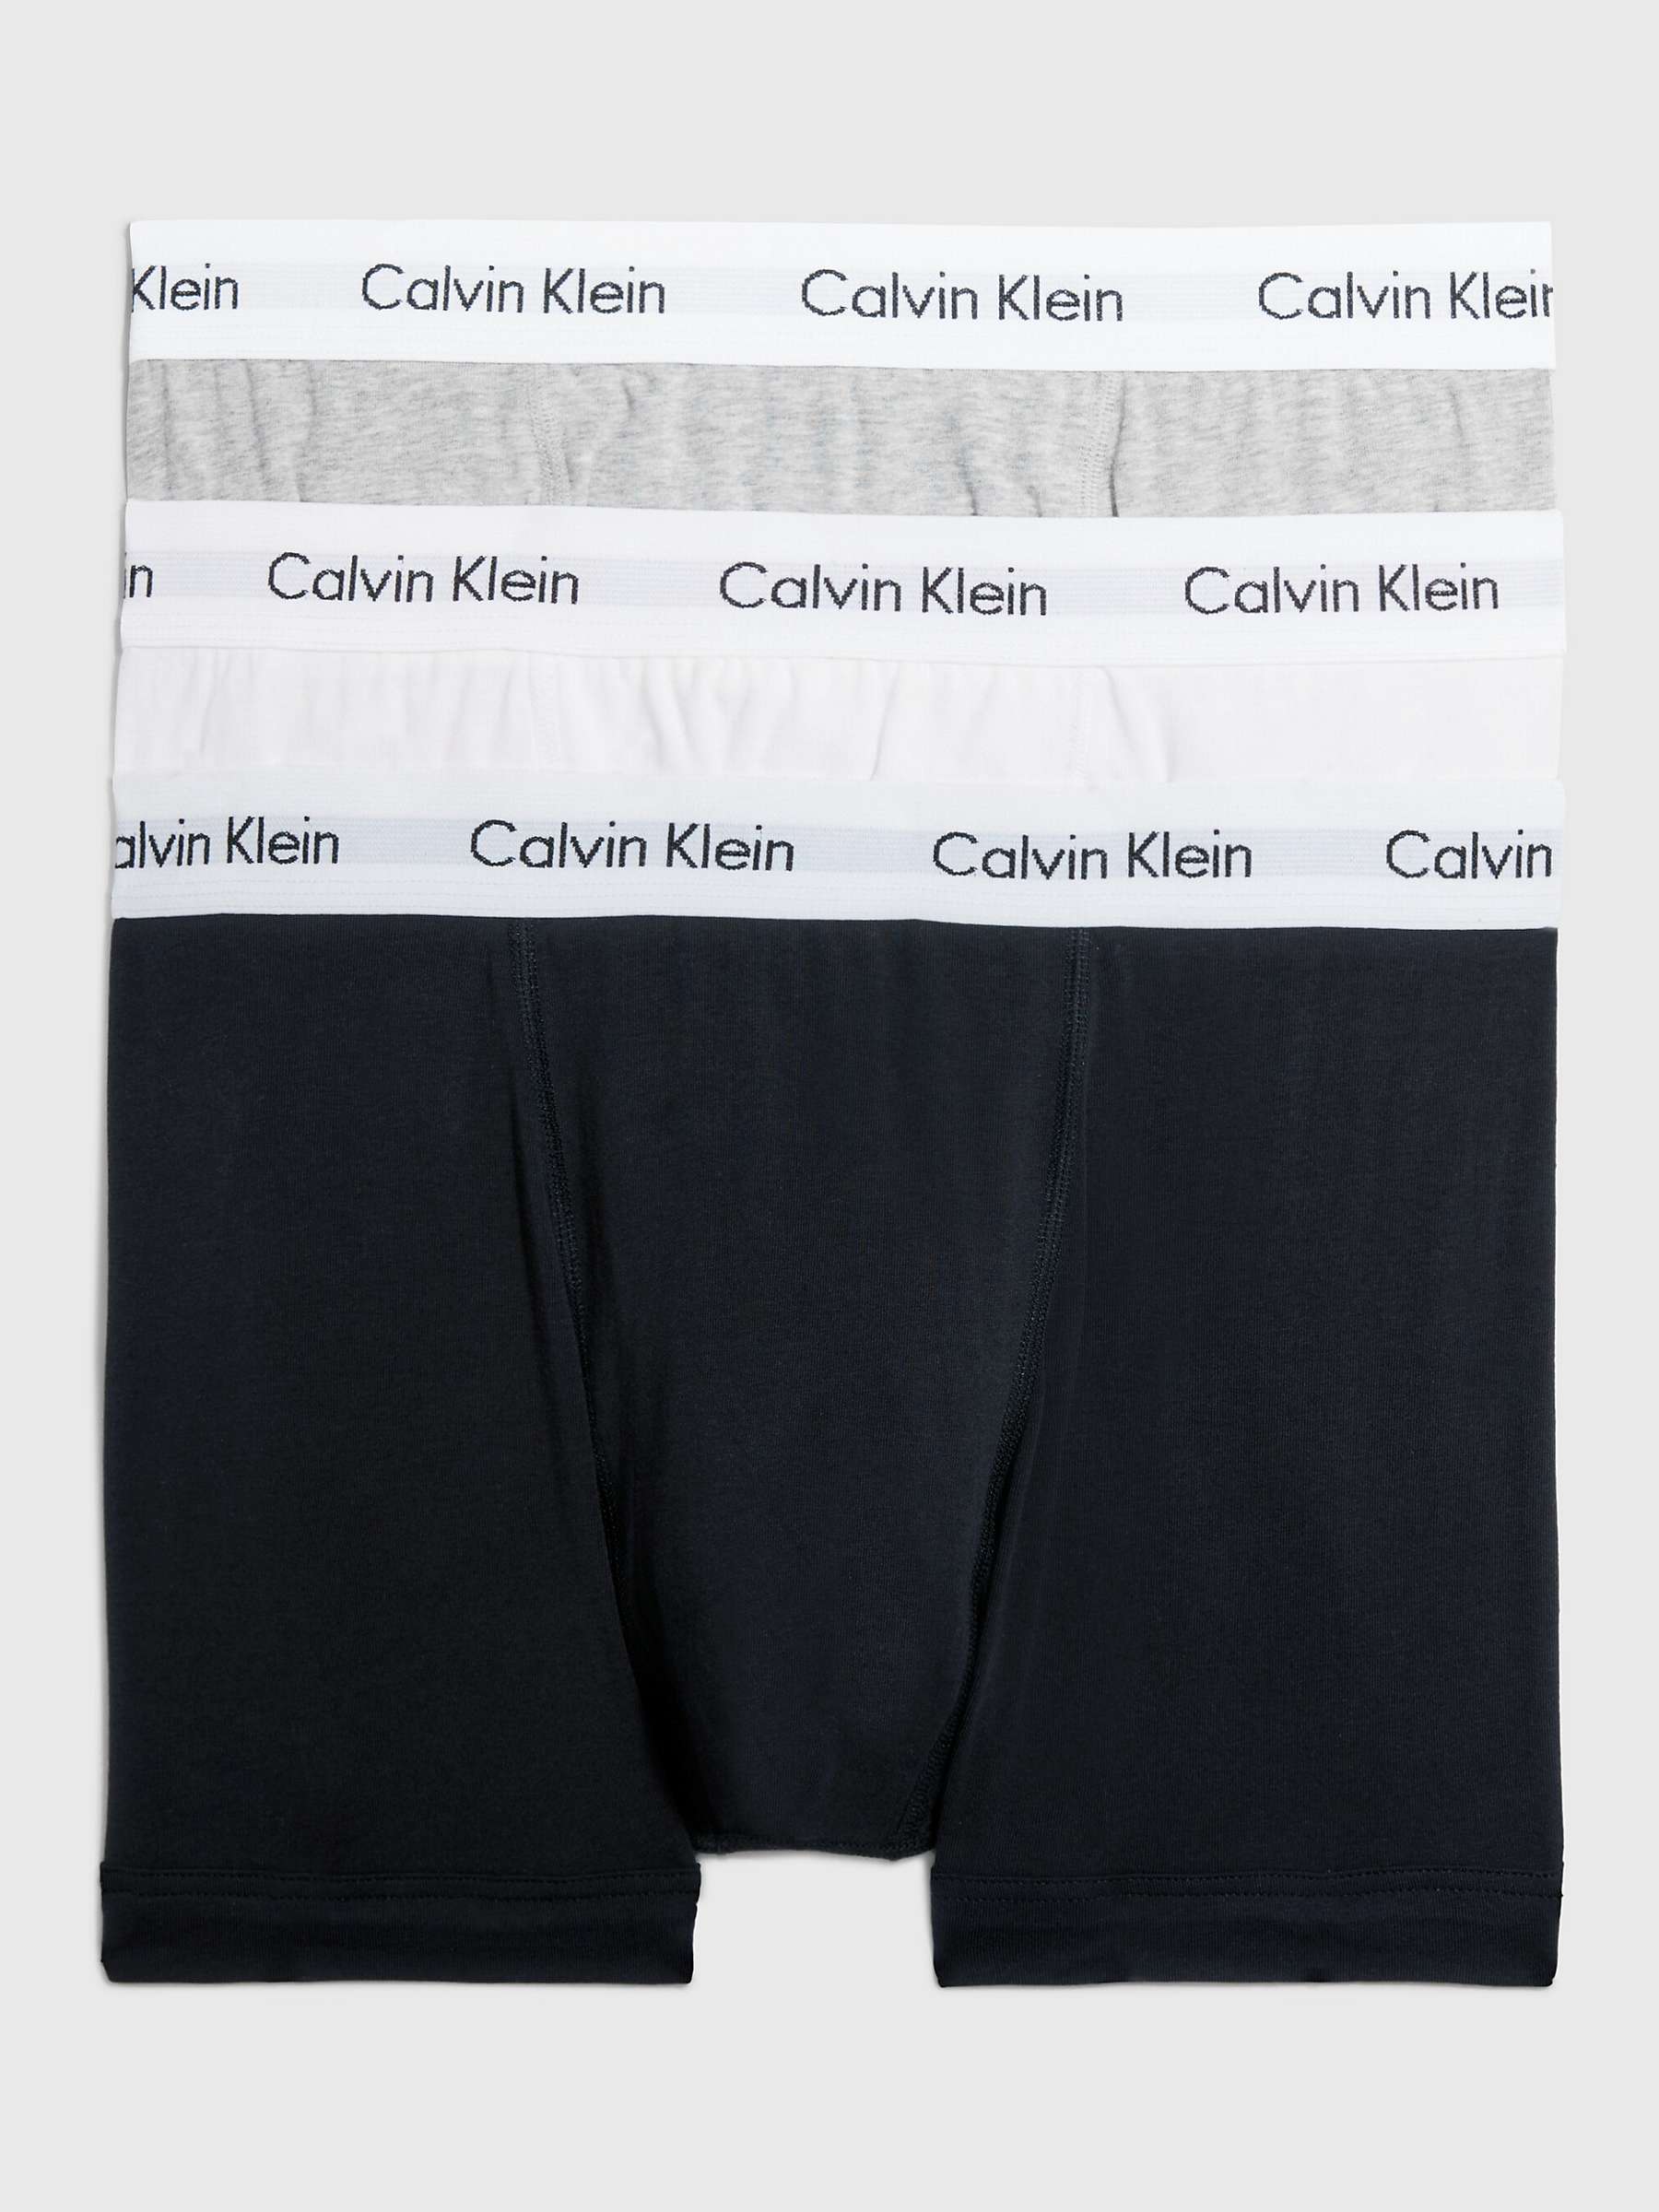 Calvin Klein Regular Cotton Stretch Trunks, Pack of 3, Black/White/Grey ...